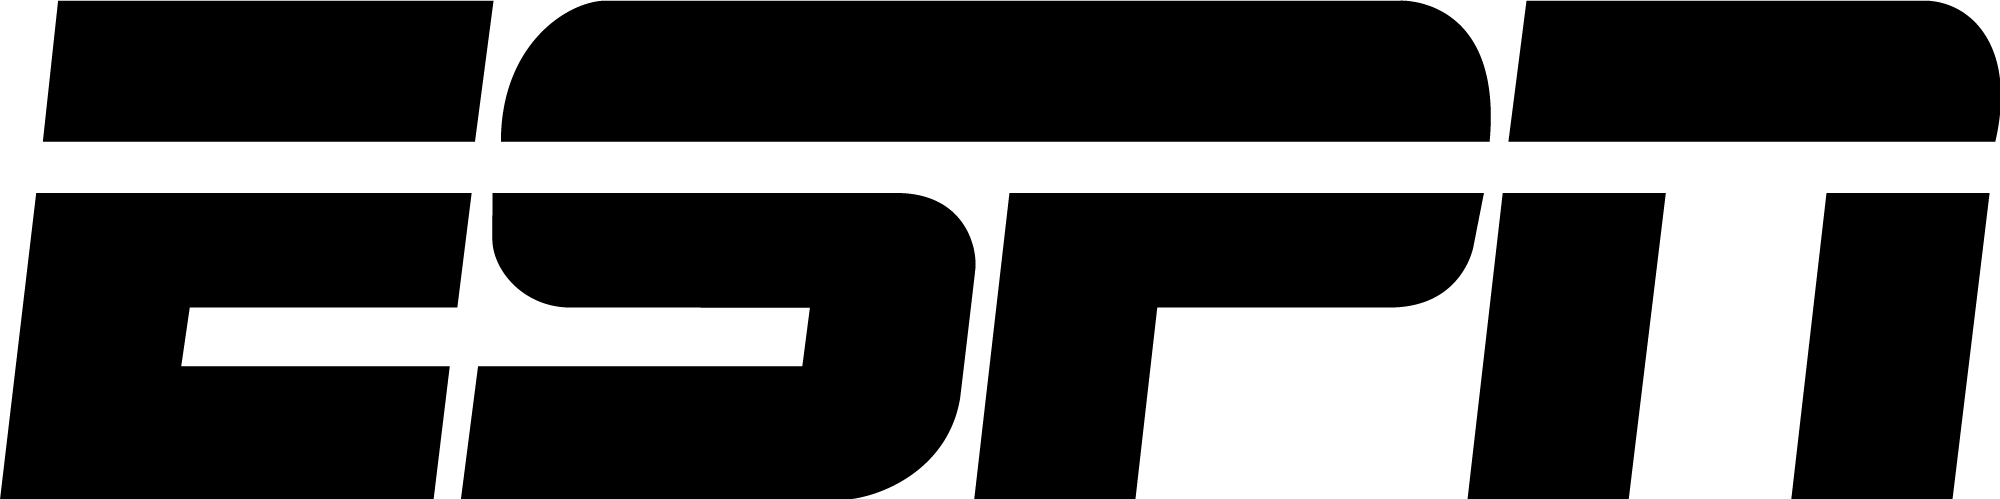 espn logo black